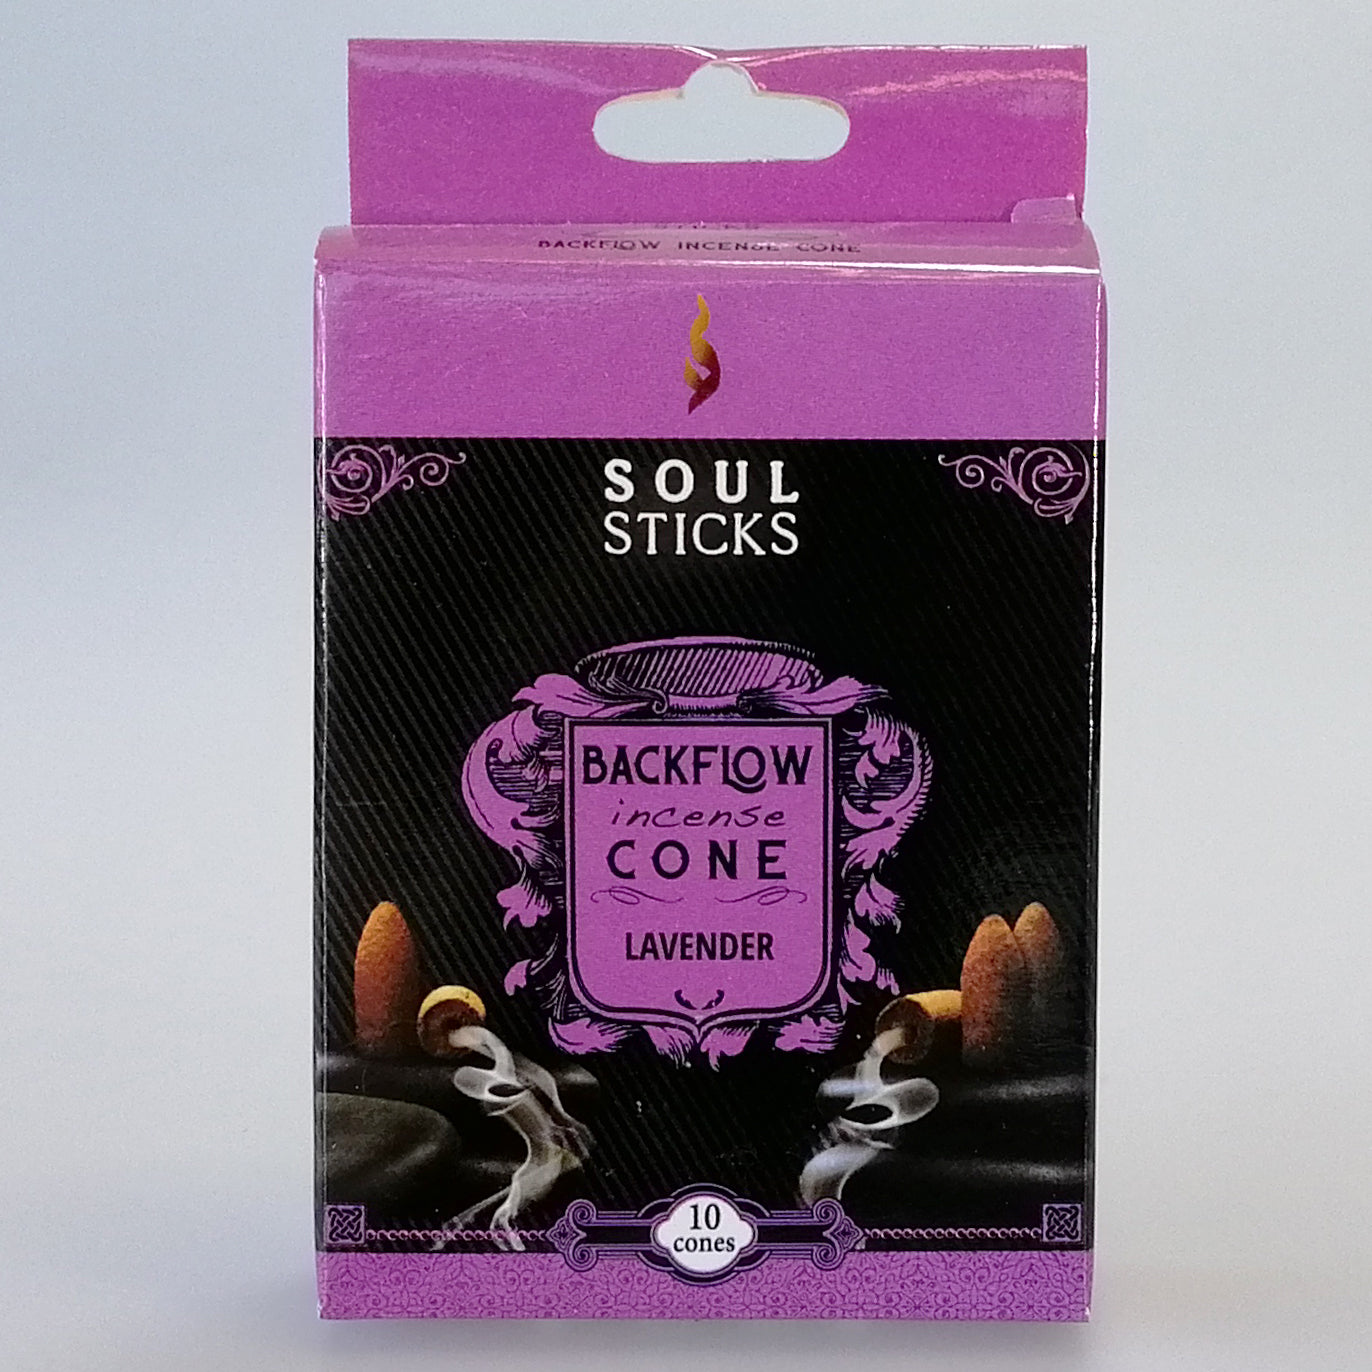 Soul Sticks Backflow Incense Cones - Lavender